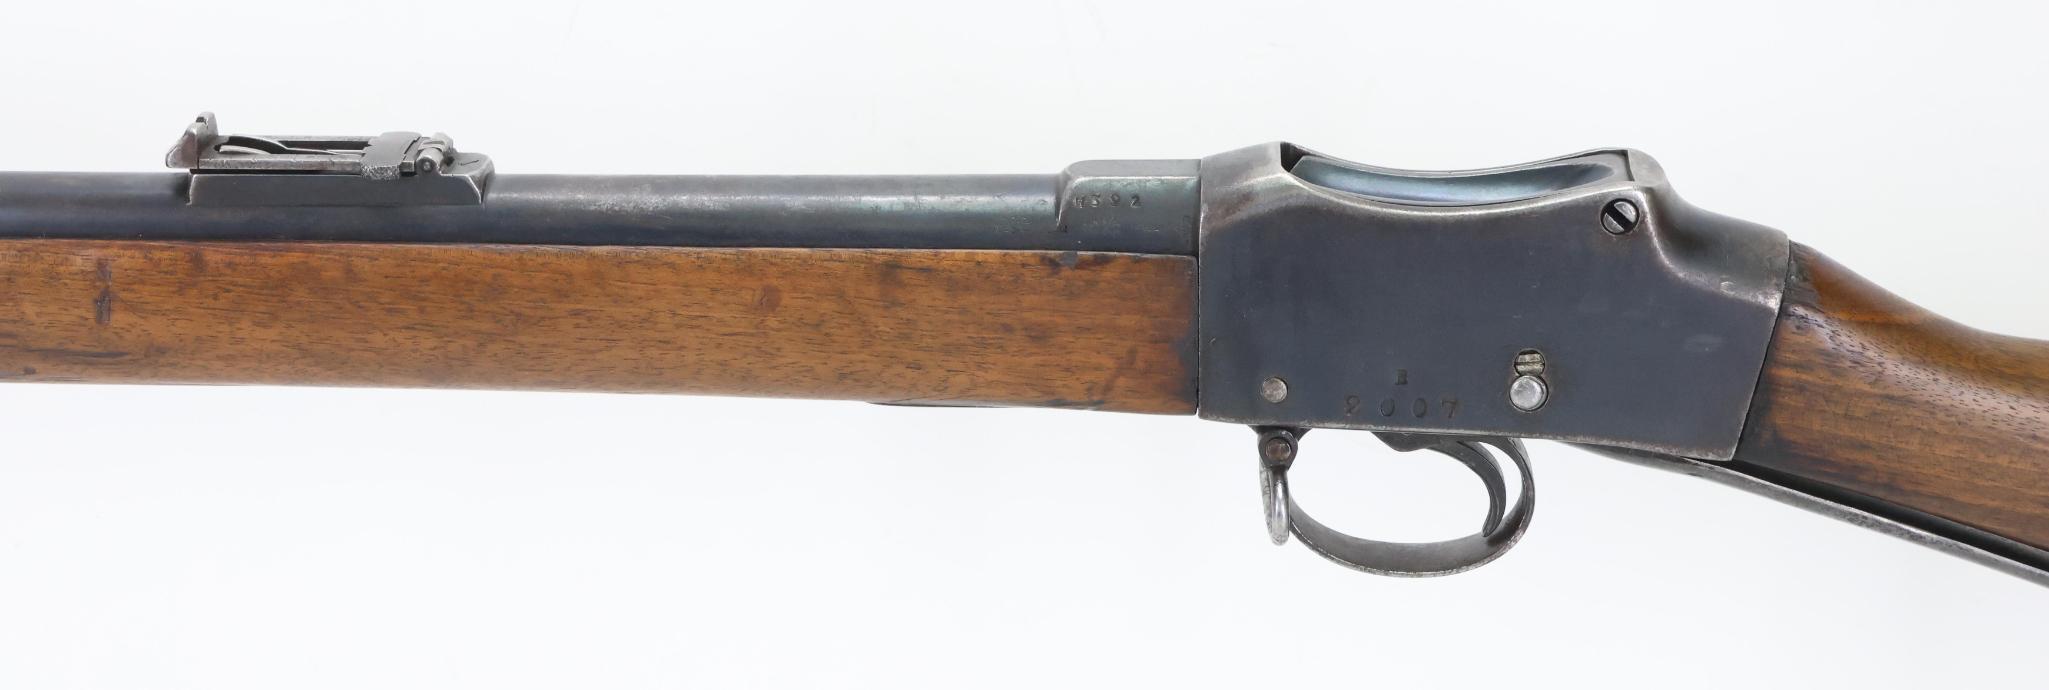 British Martini Enfield MK IV Dropping Block Rifle